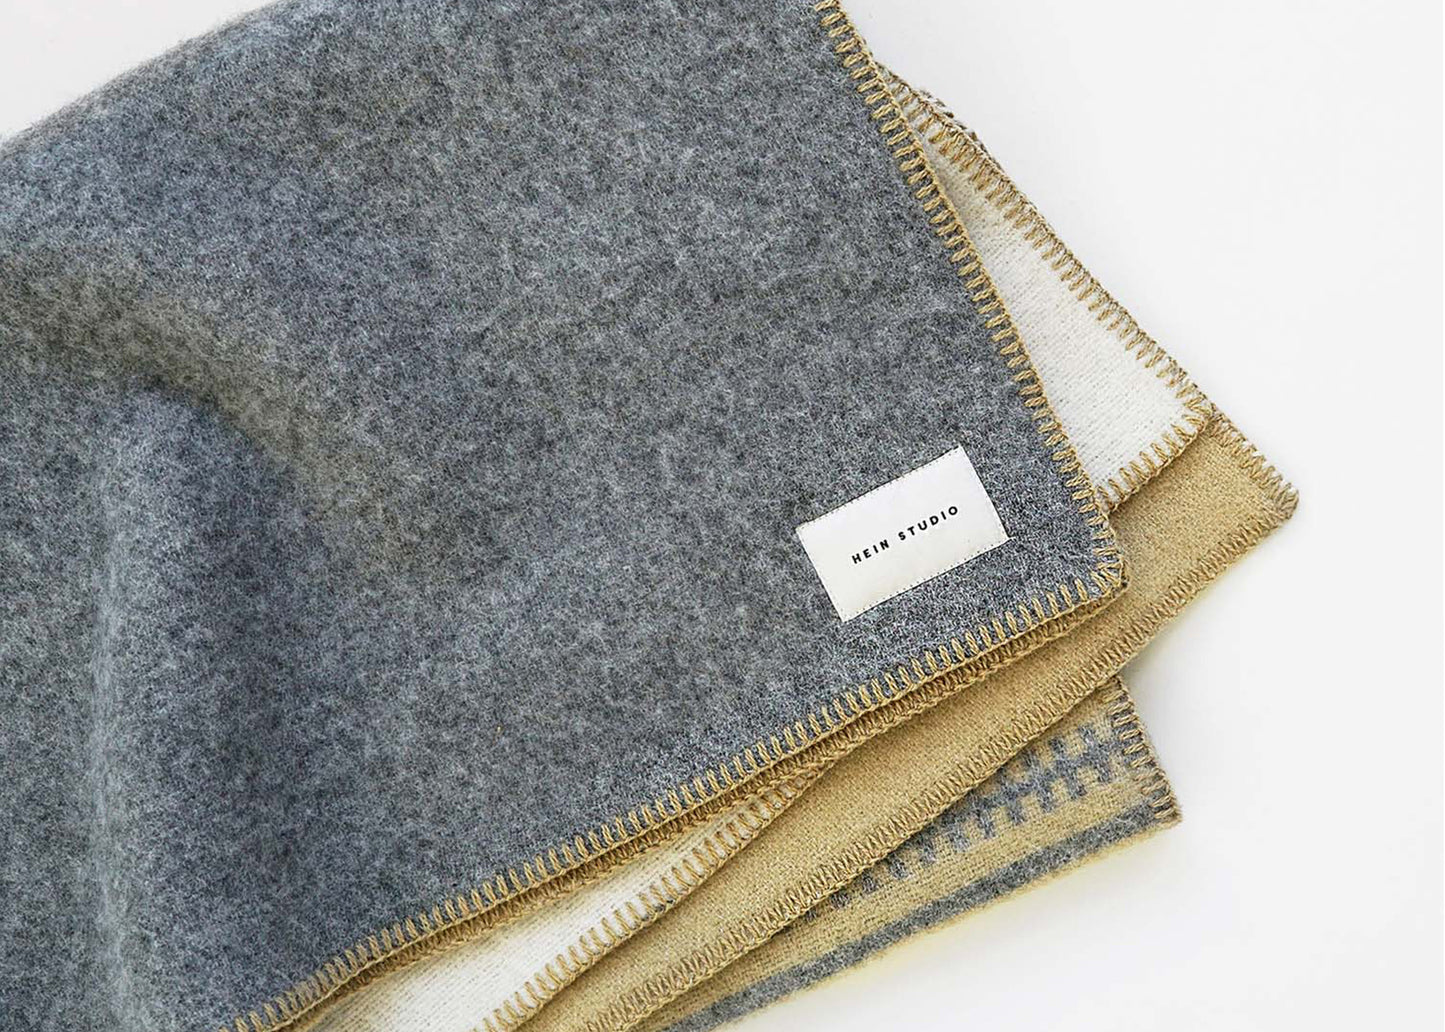 Aiyana no. 02 - Creme/Grey Blanket by Hein Studio